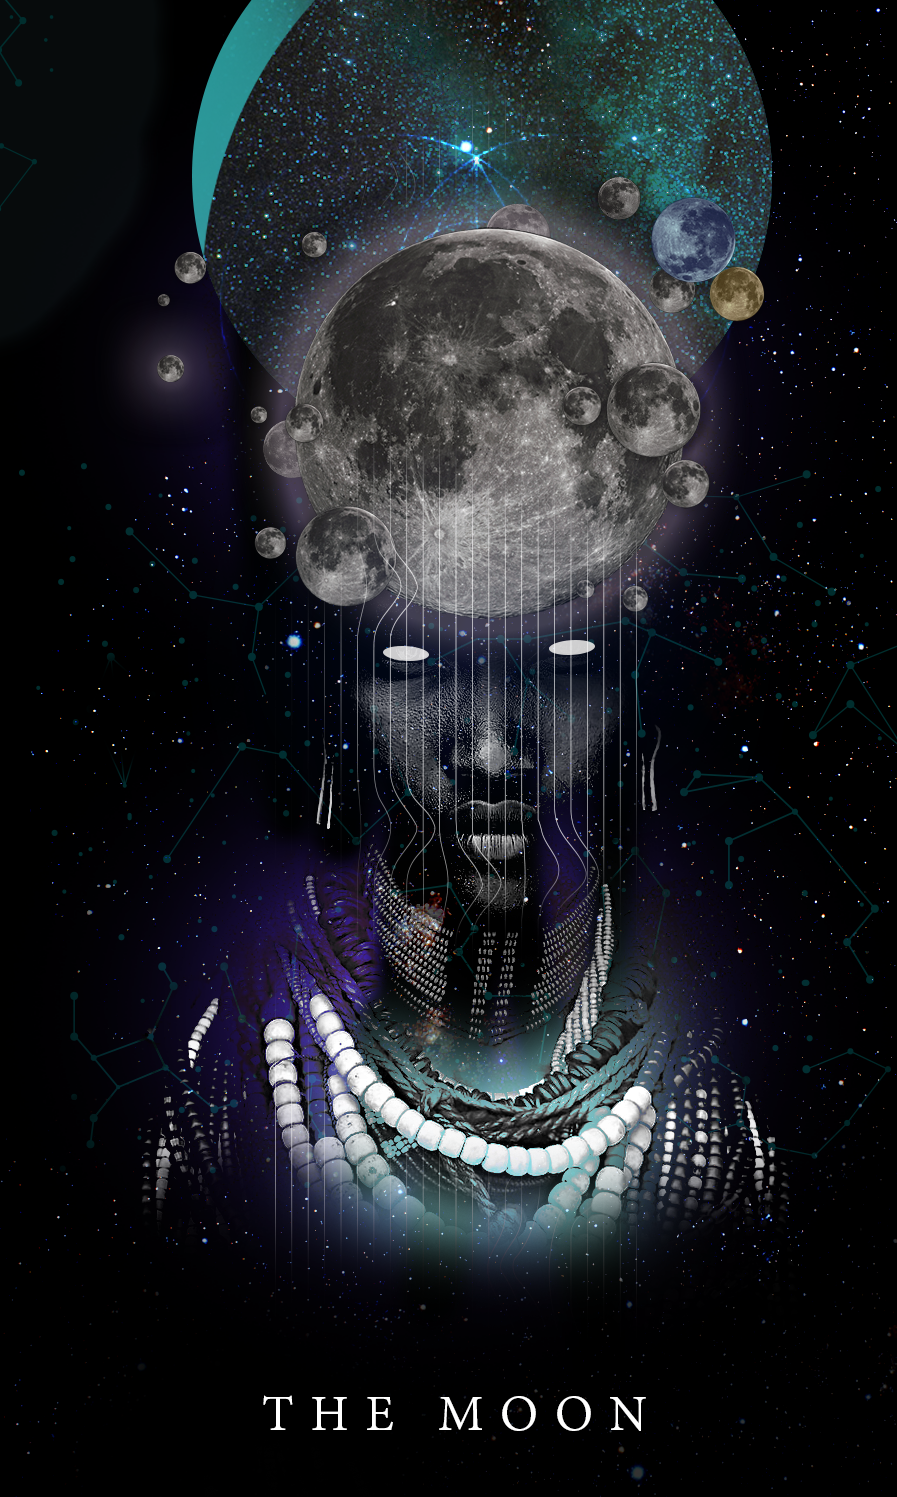 tarot graphic design  spirituality faith God Pray mythology journey afro FUTURISM